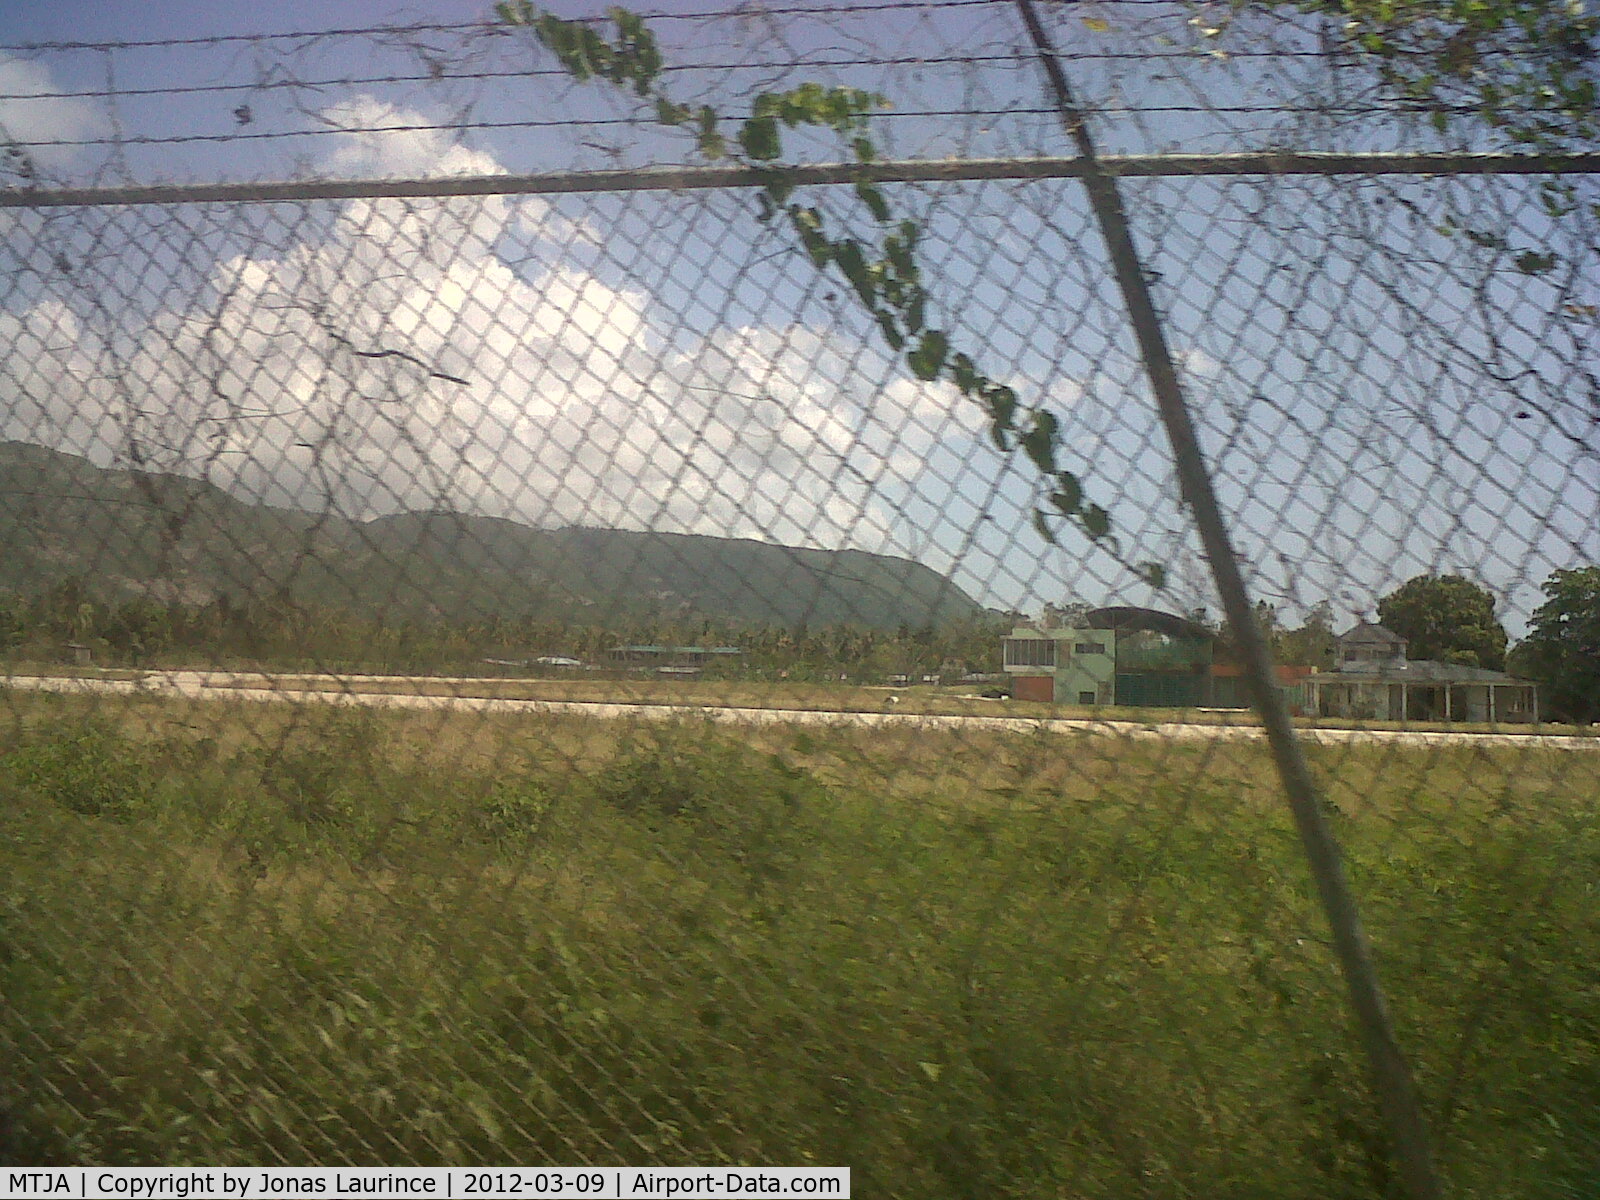 Jacmel Airport, Jacmel Haiti (MTJA) - View of the Airport of Jacmel